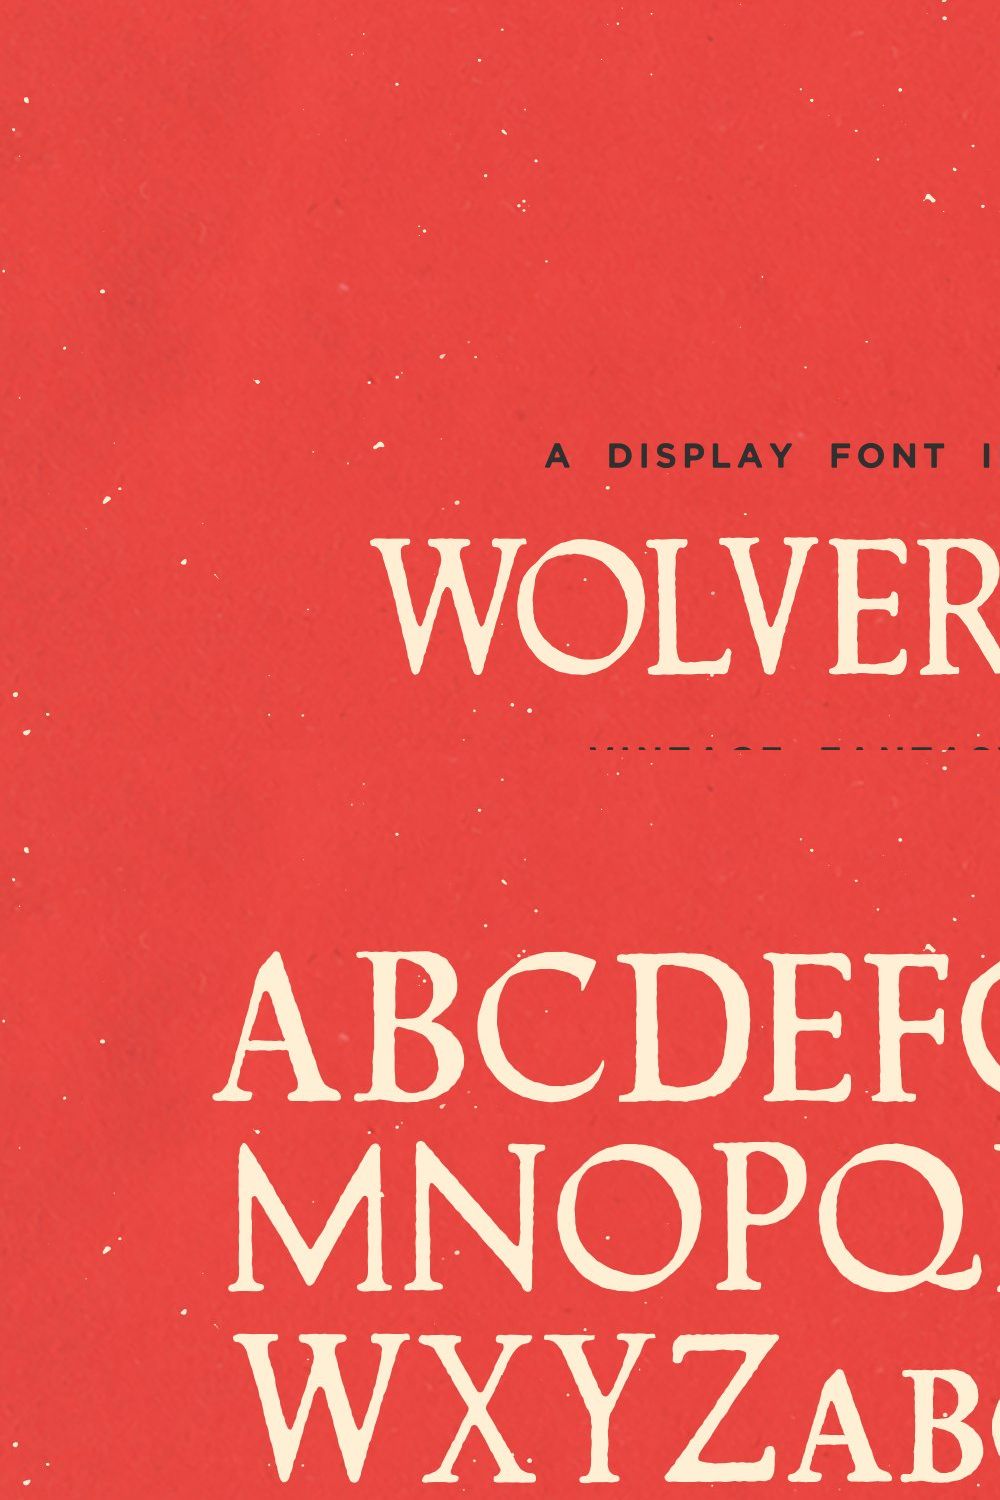 Wolvercote Regular - Display Font pinterest preview image.